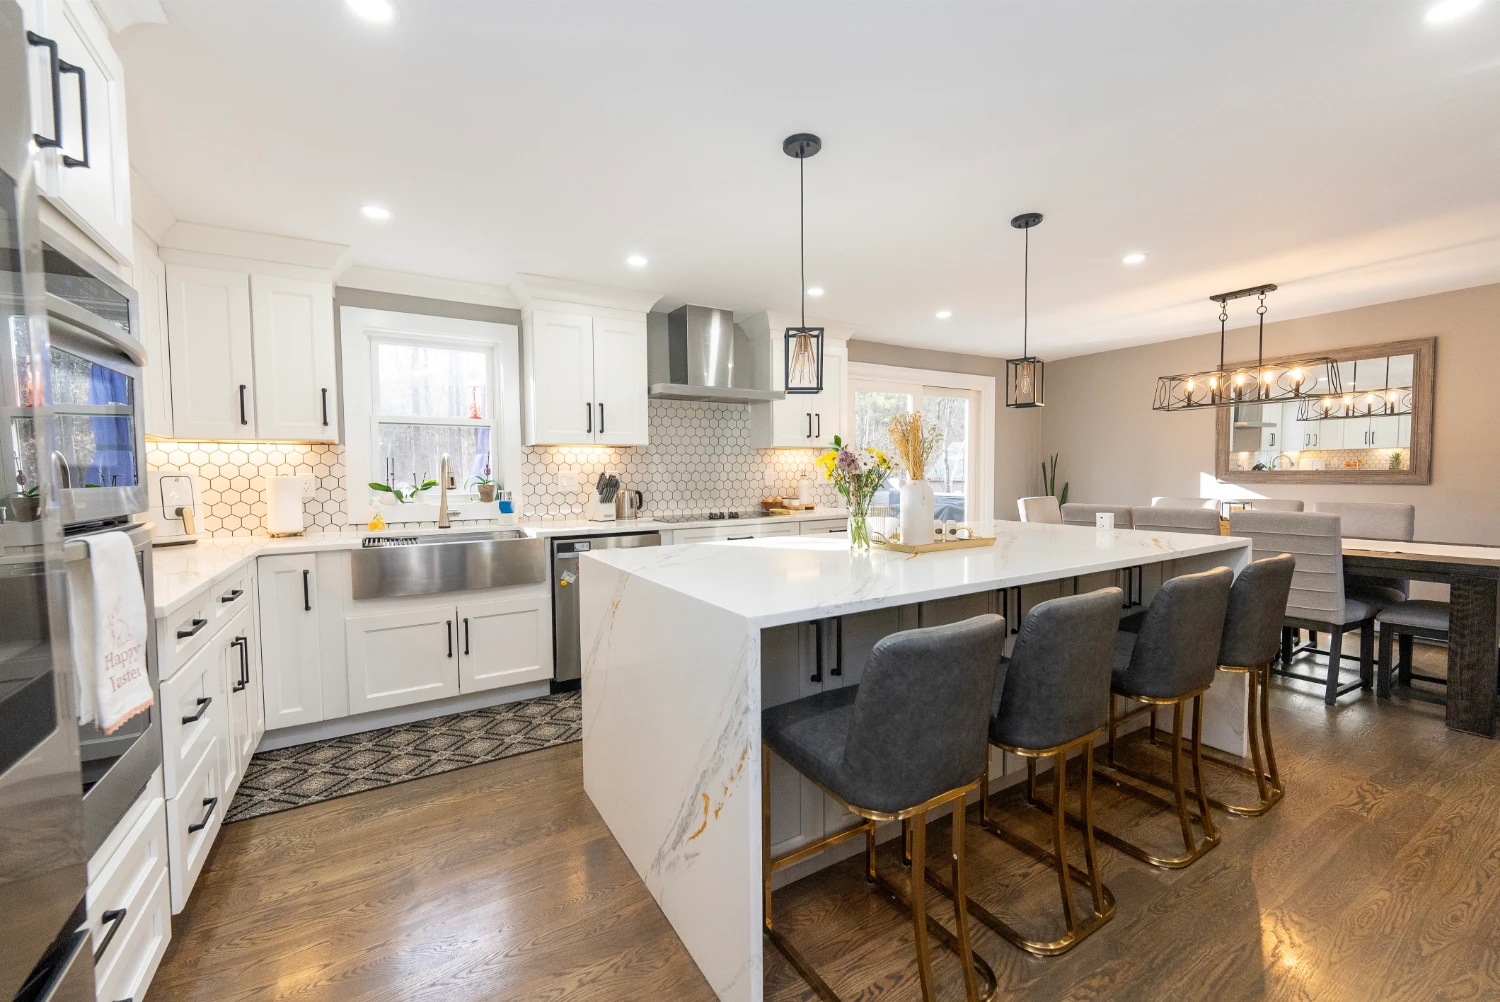 Updated kitchen with white cabinetry, gold stools, and stylish geometric backsplash.